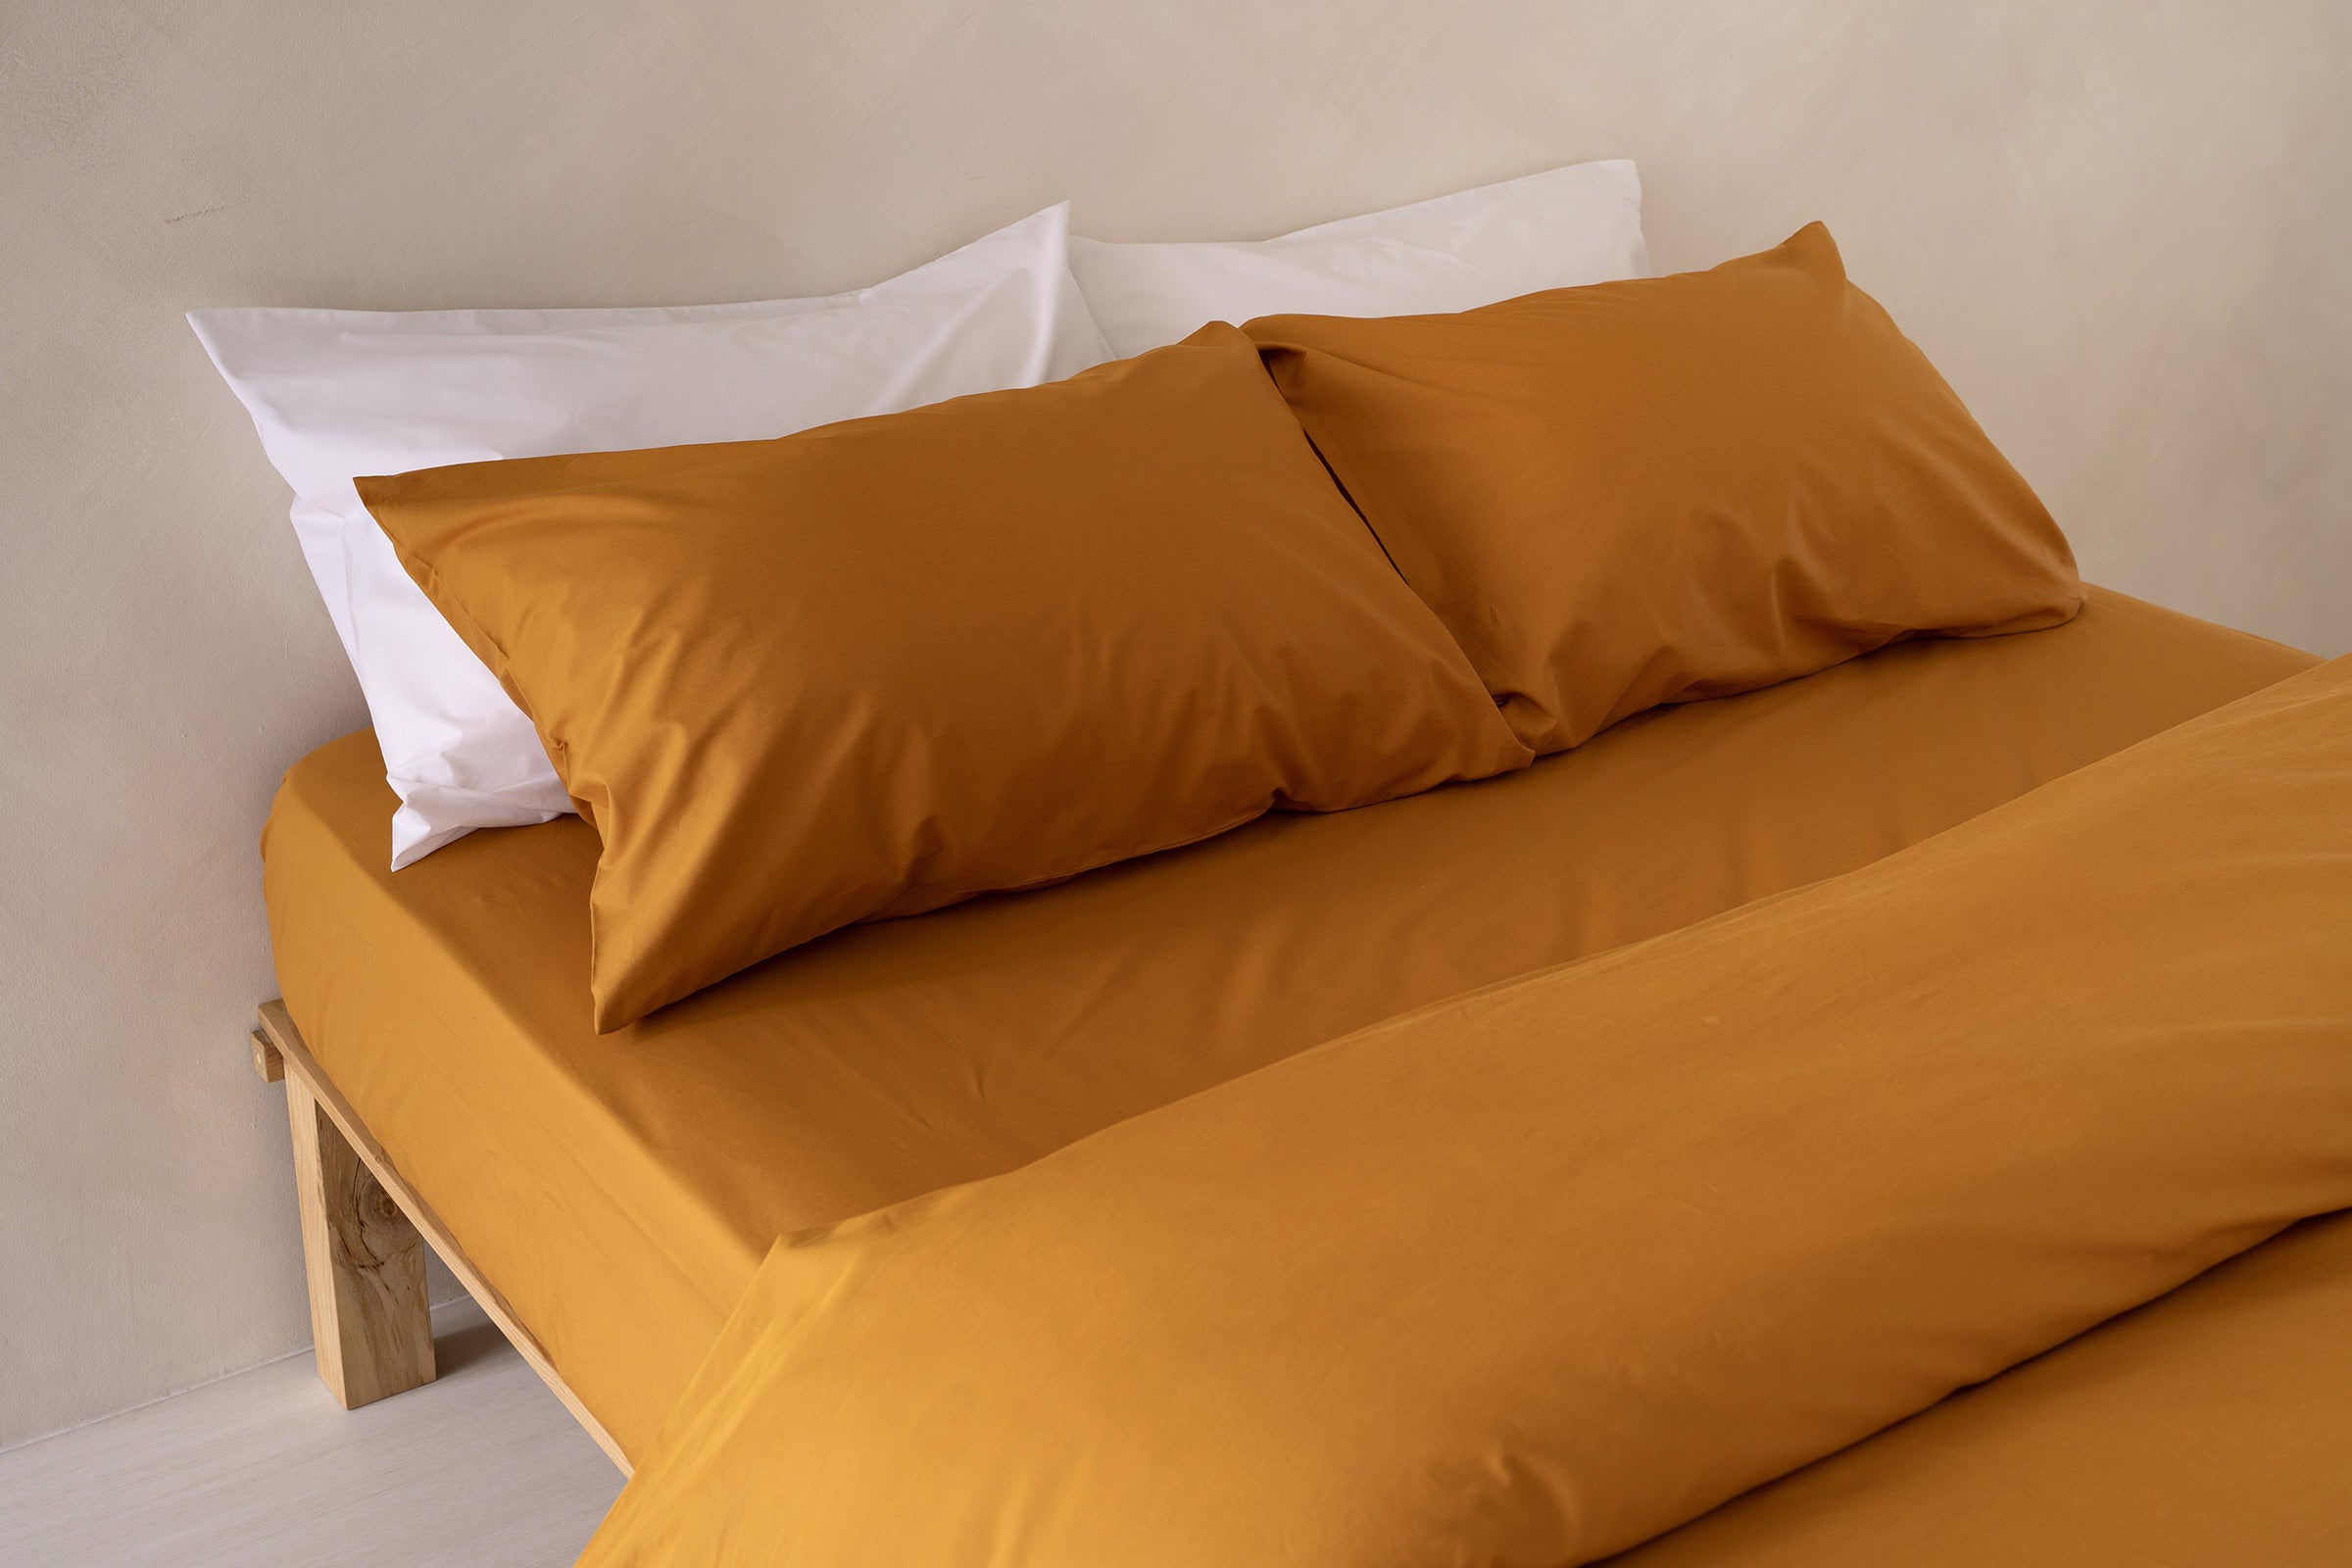 crisp-mustard-fitted-sheet-duvet-cover-pillowcase-pair-white-pillowcase-pair-side-view-by-sojao.jpg